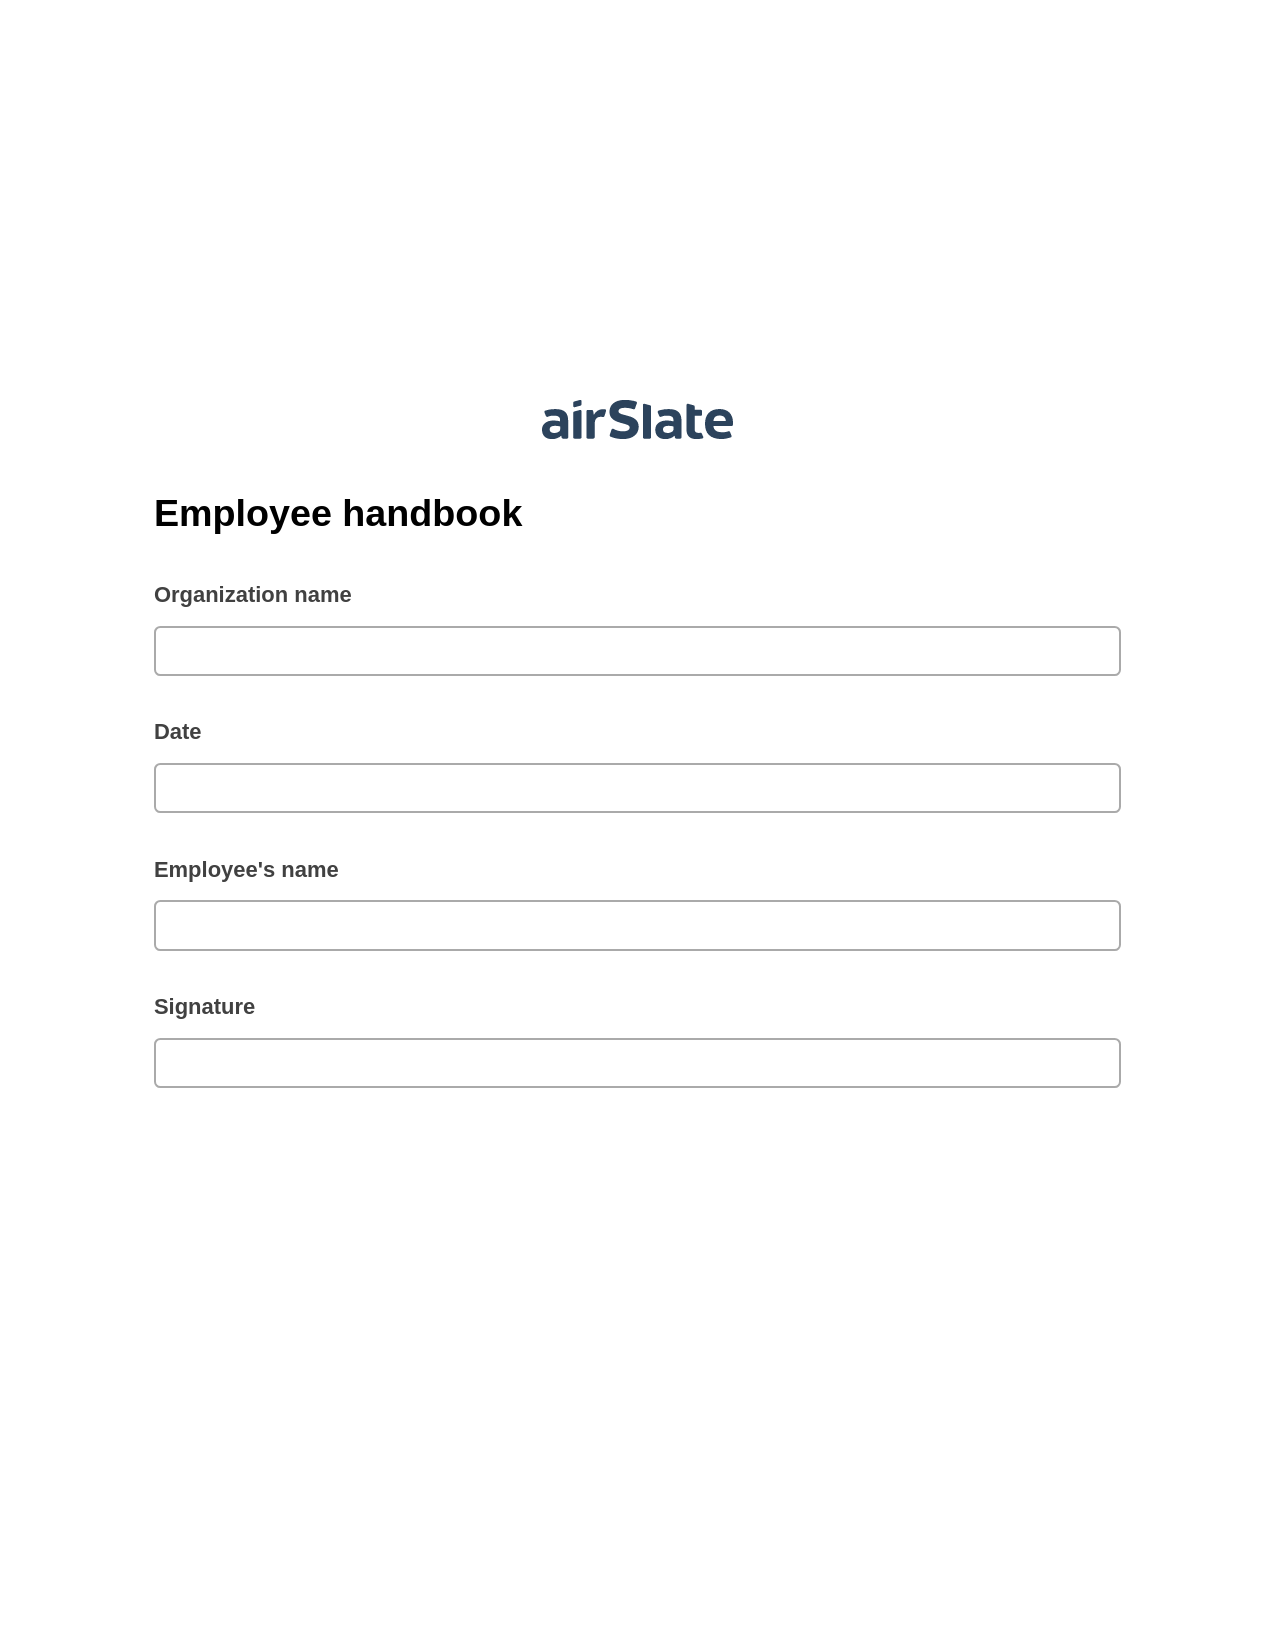 Employee handbook Pre-fill from Salesforce Record Bot, Invoke Salesforce Process Bot, Archive to SharePoint Folder Bot